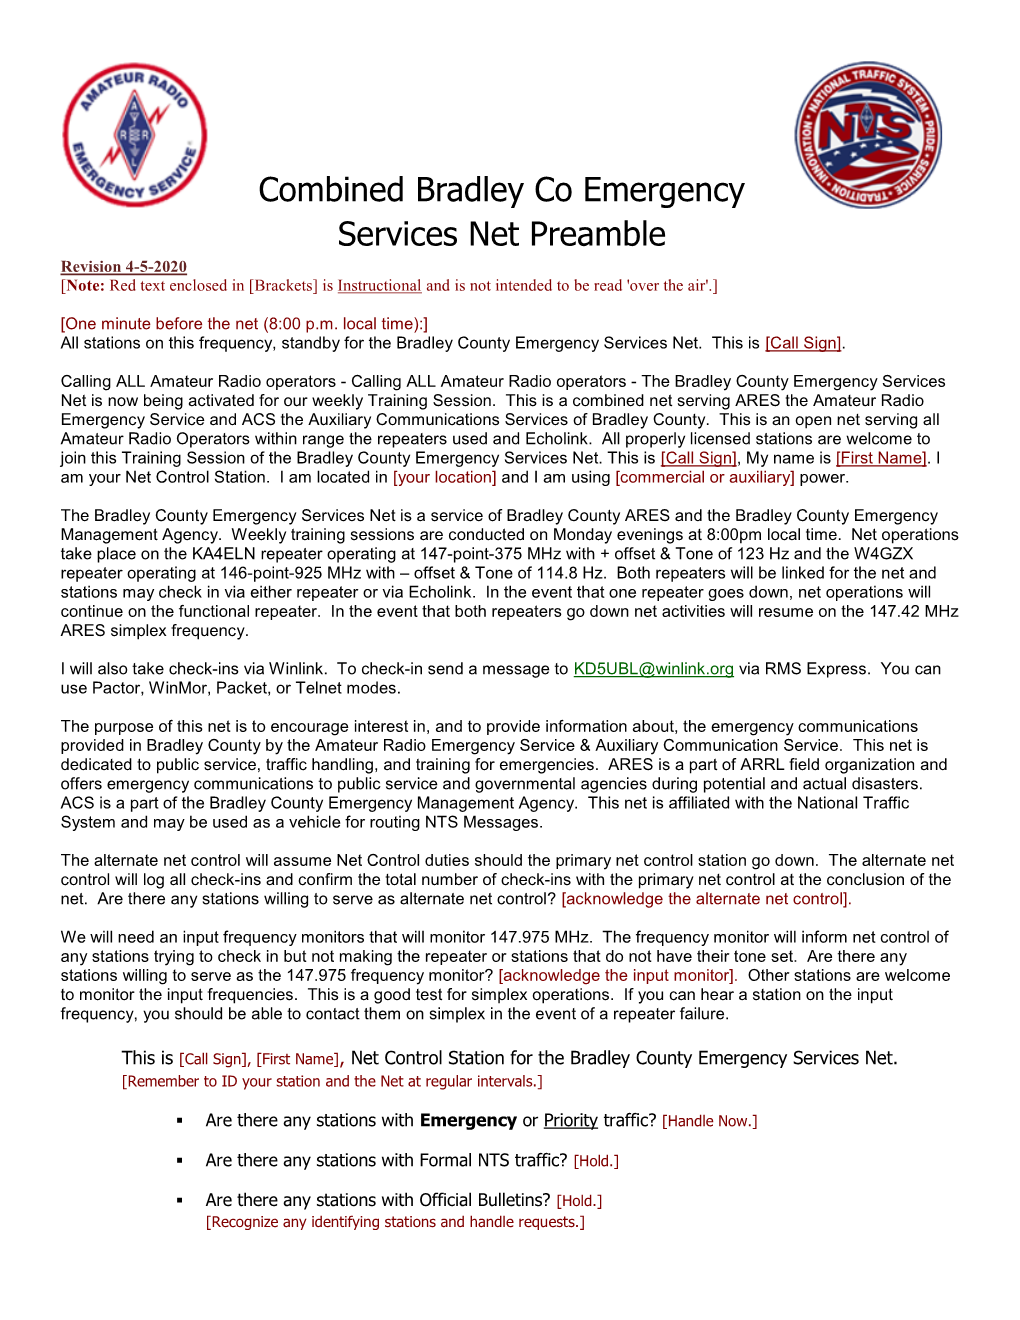 Combined Bradley Co Emergency Services Net Preamble